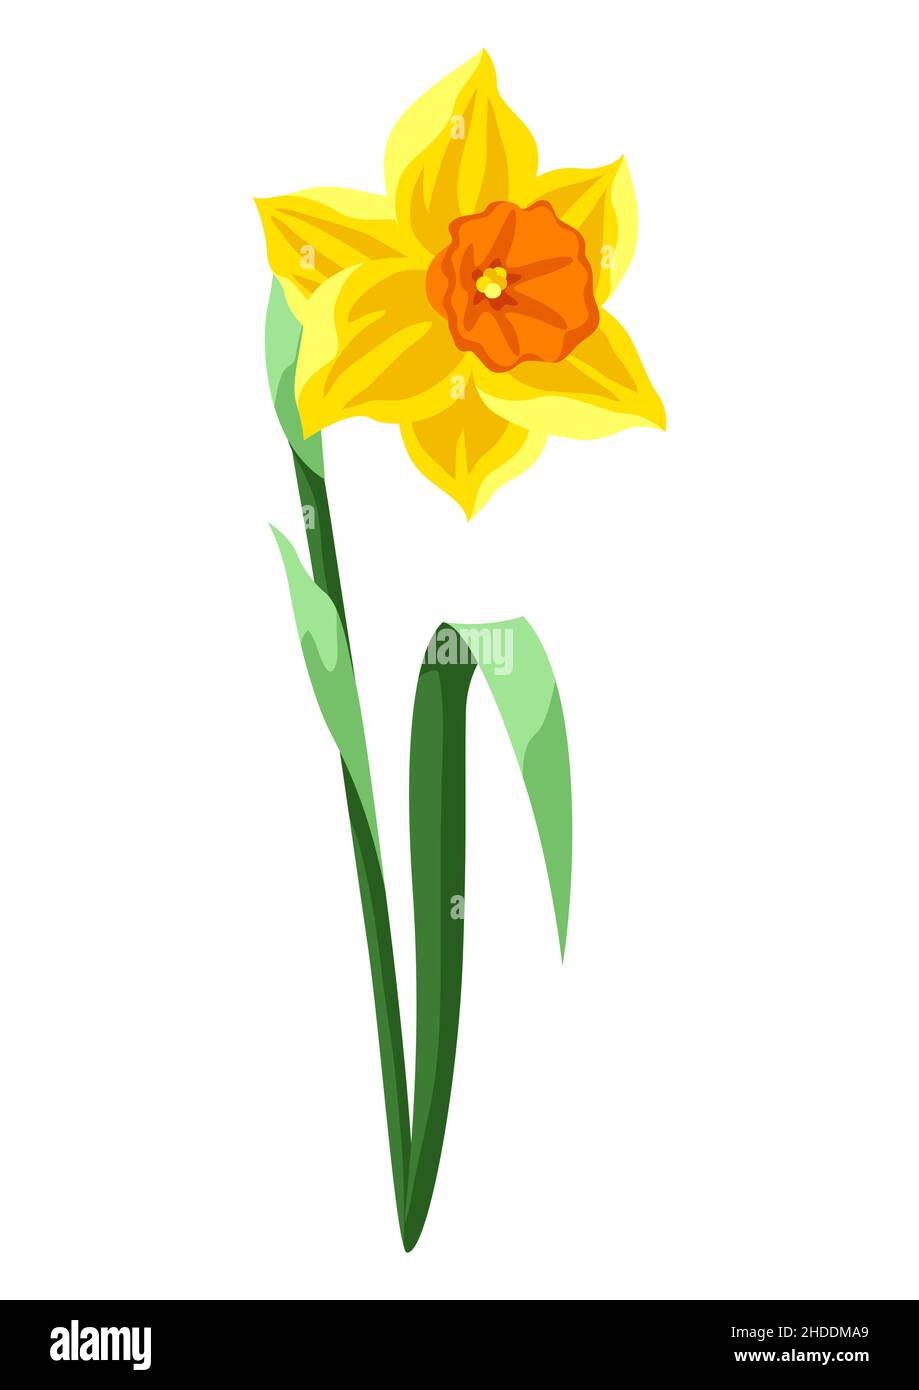 Illustration of daffodil flower. Beautiful decorative spring plant ...